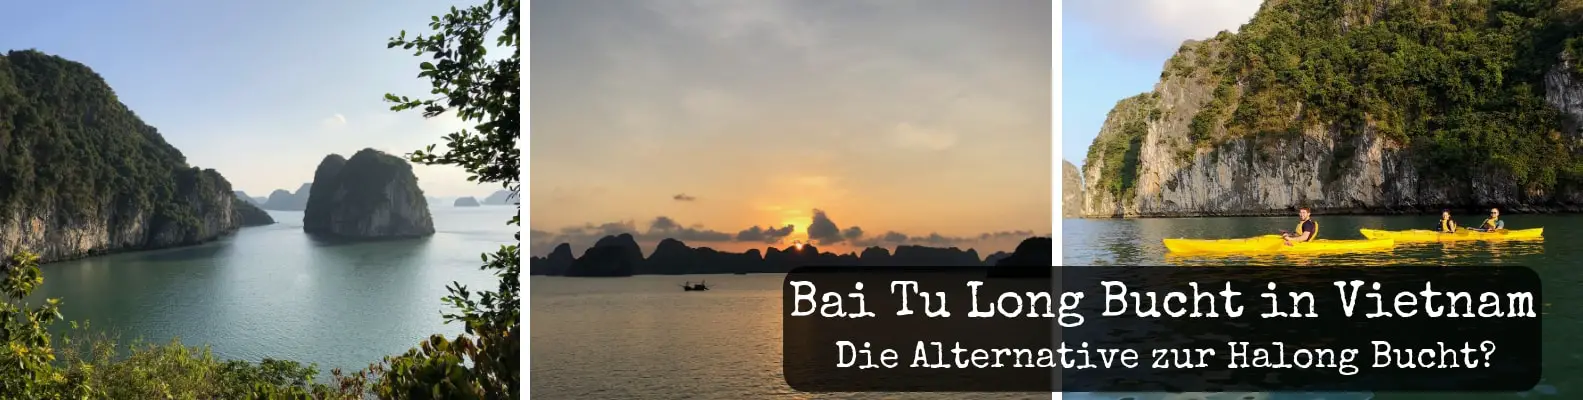 Bai Tu Long Bucht Vietnam